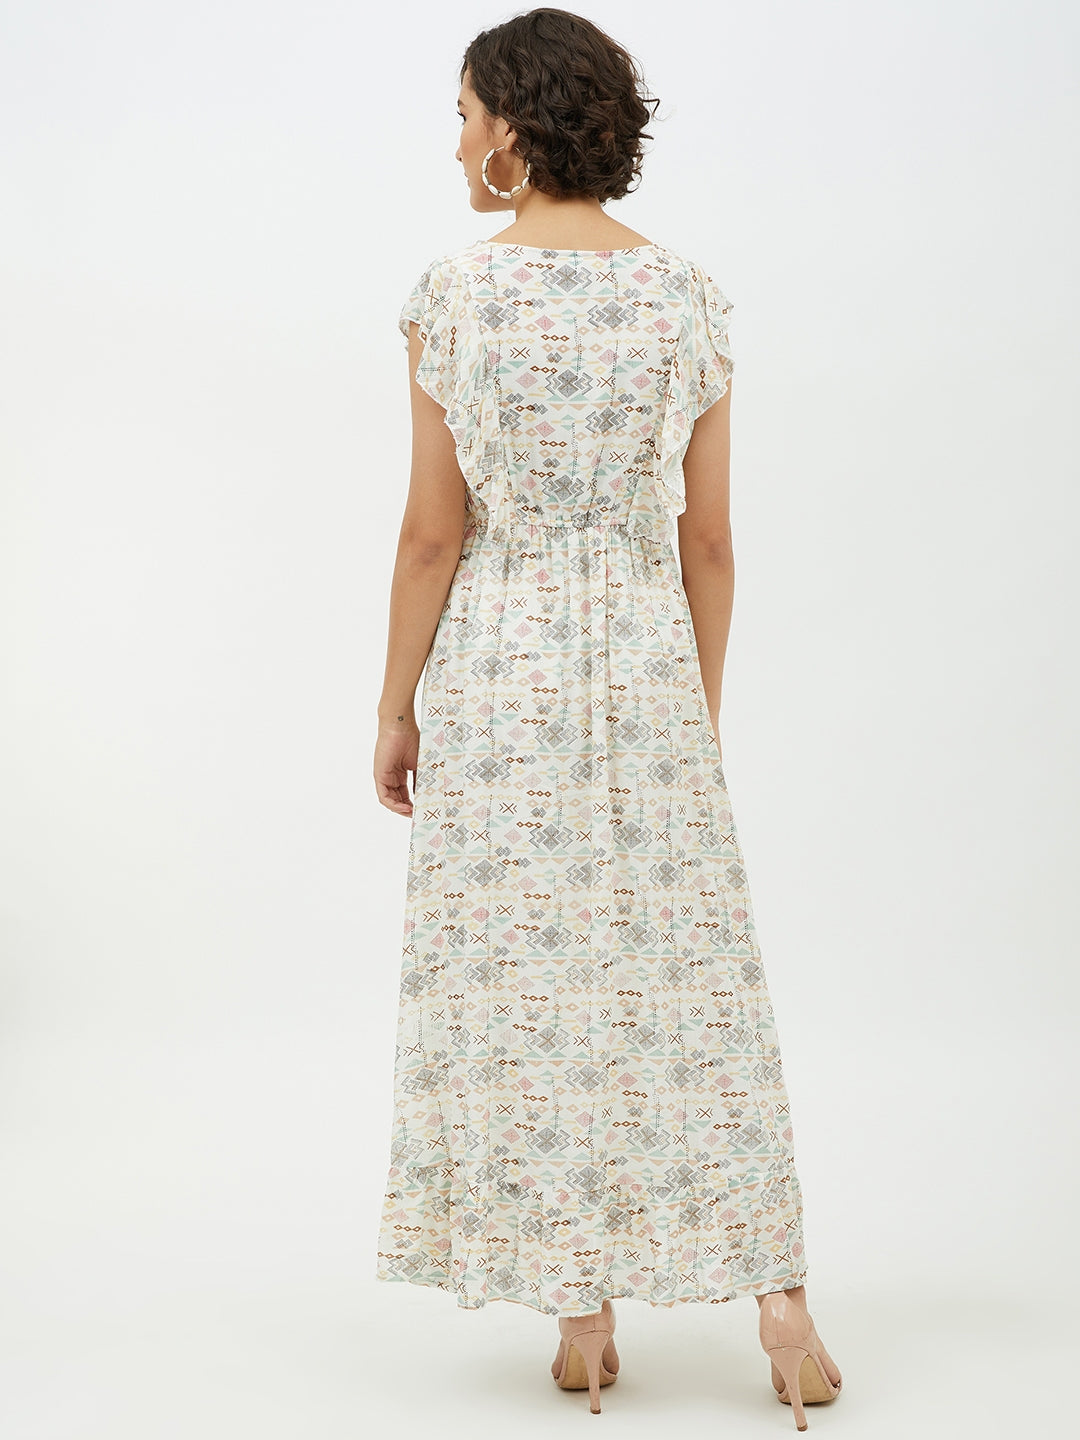 Women's White Printed long Dress - StyleStone